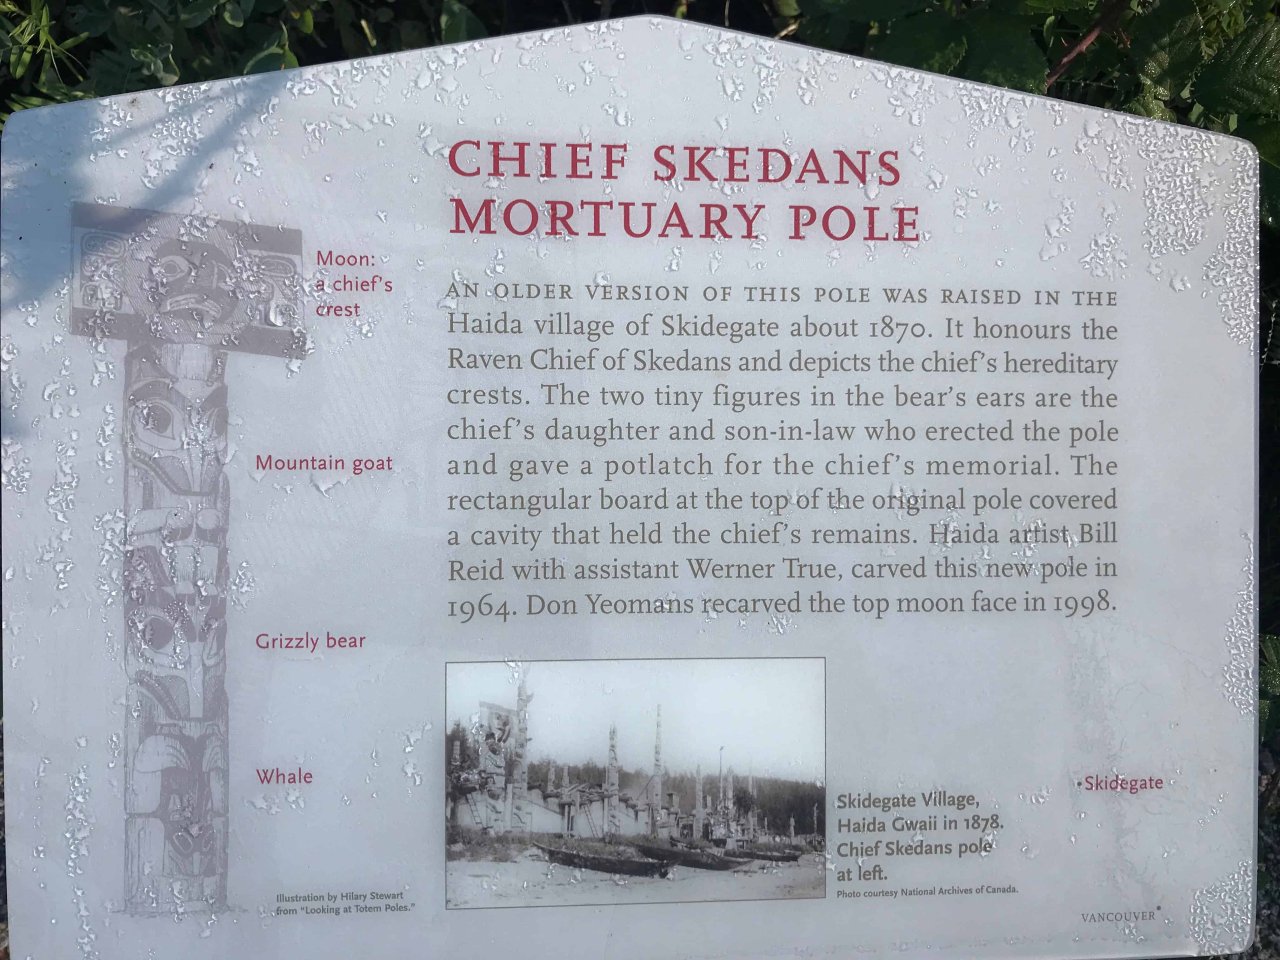 Chief Skedan Mortuary Pole Plaque
Source: VHF Files, Jessica Quan